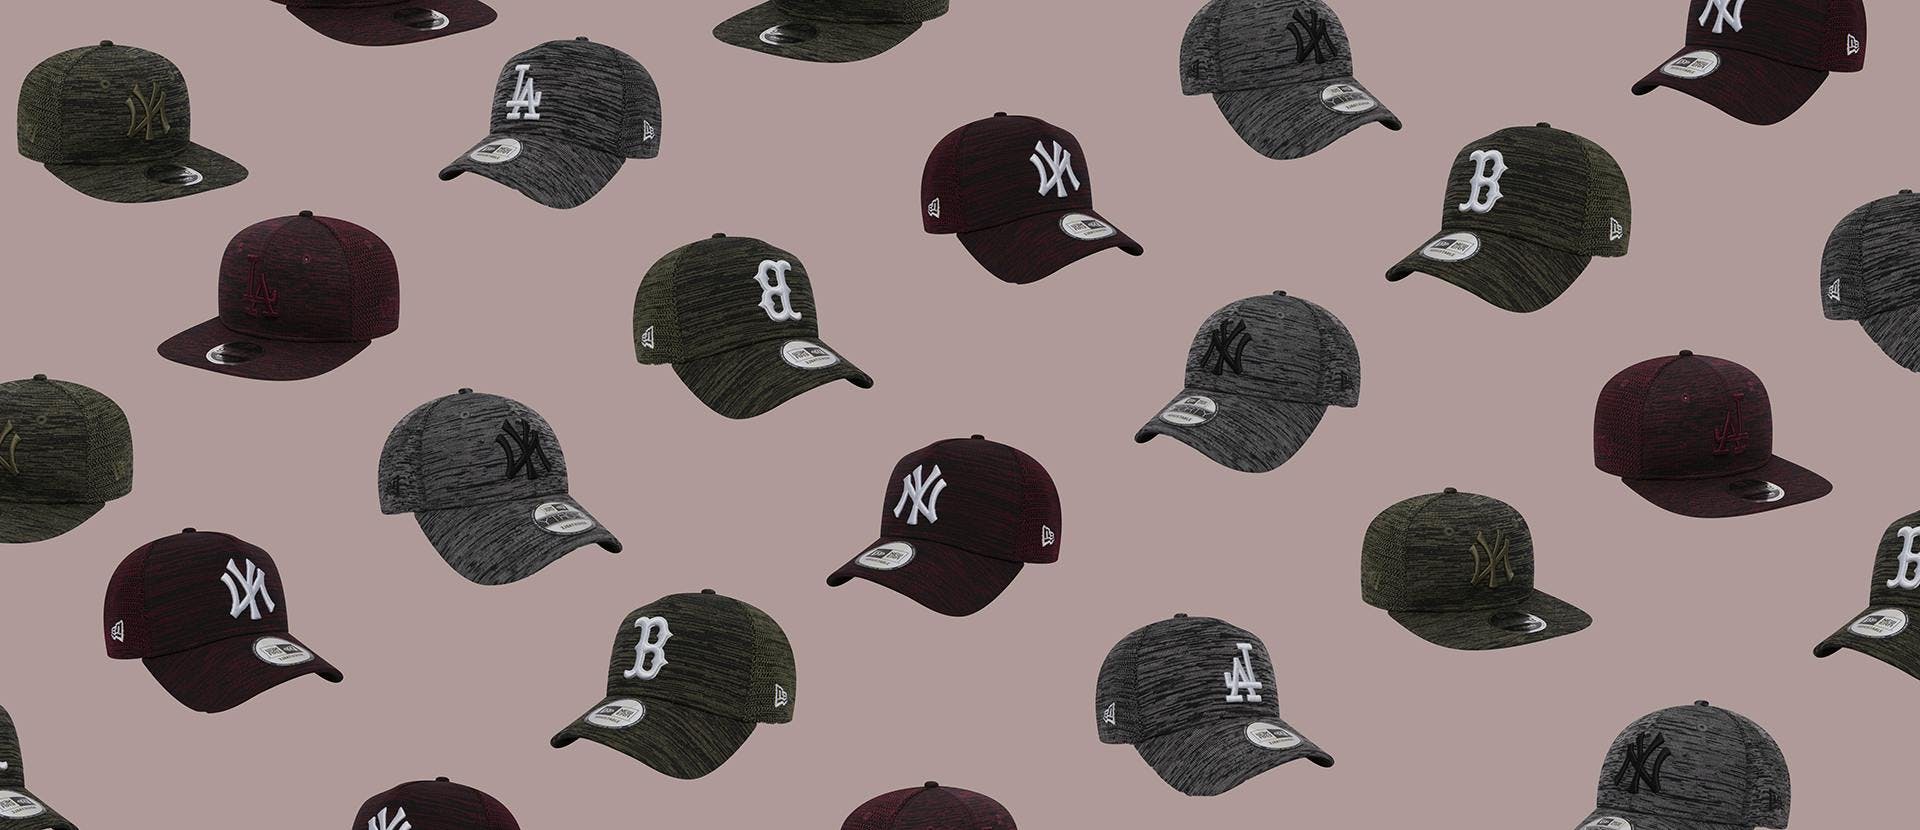 apparel clothing bird animal hat cap baseball cap